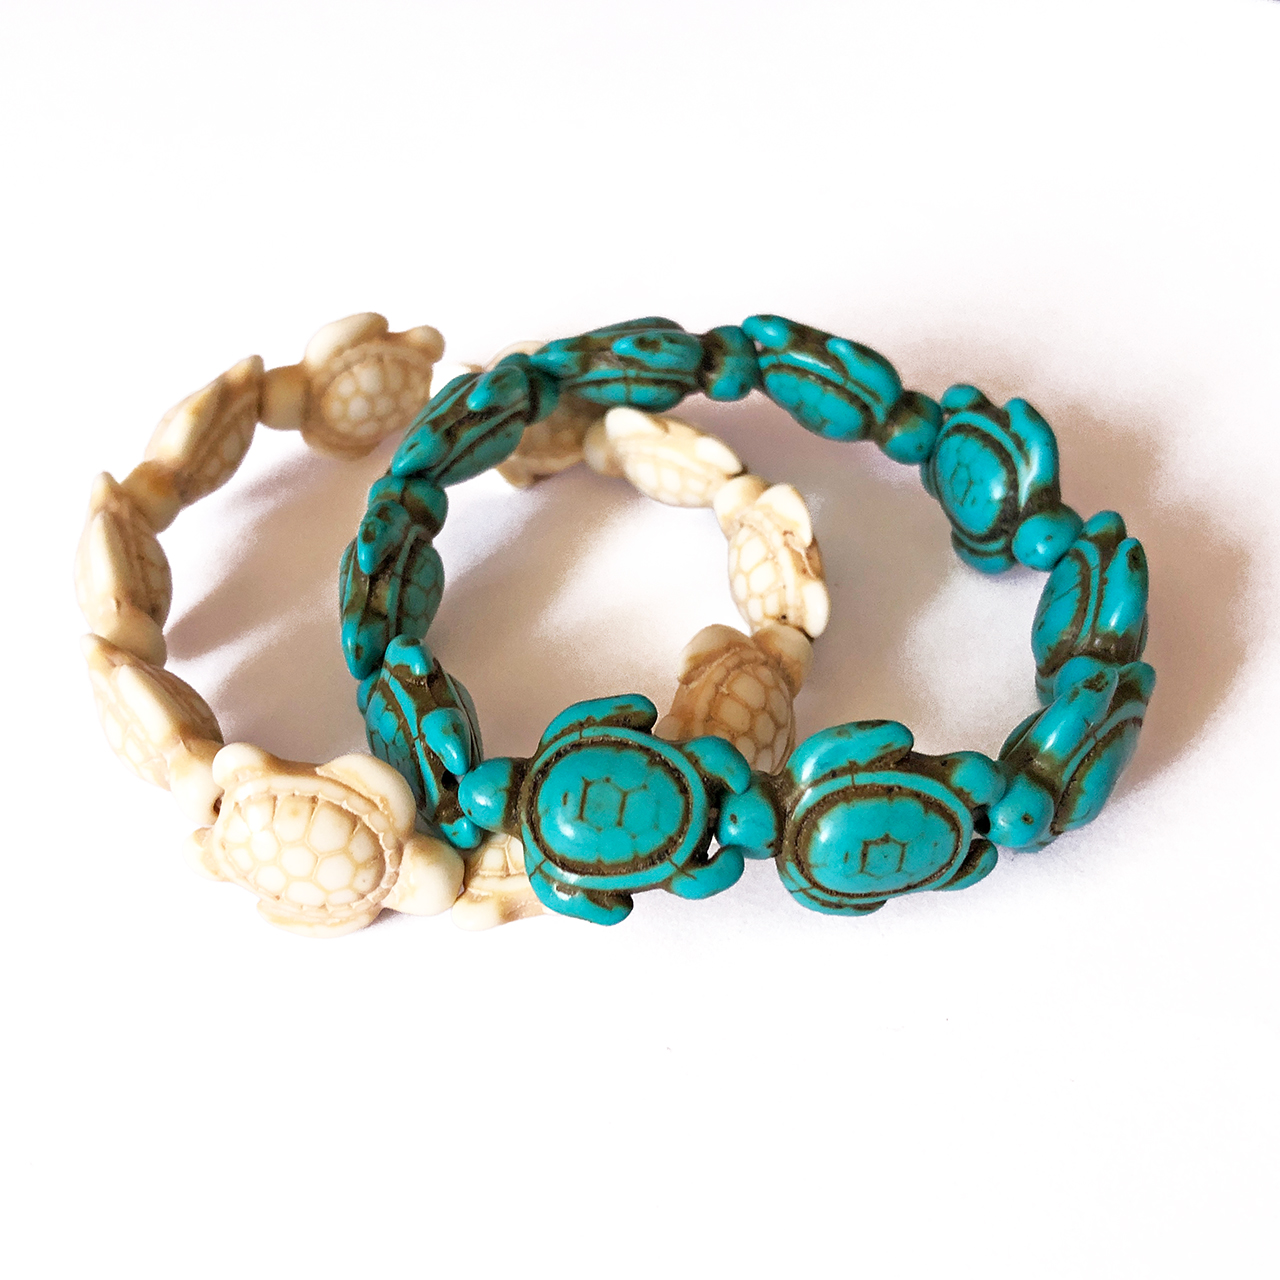 Howlite turtle bead bracelet in seashell and aqua colours